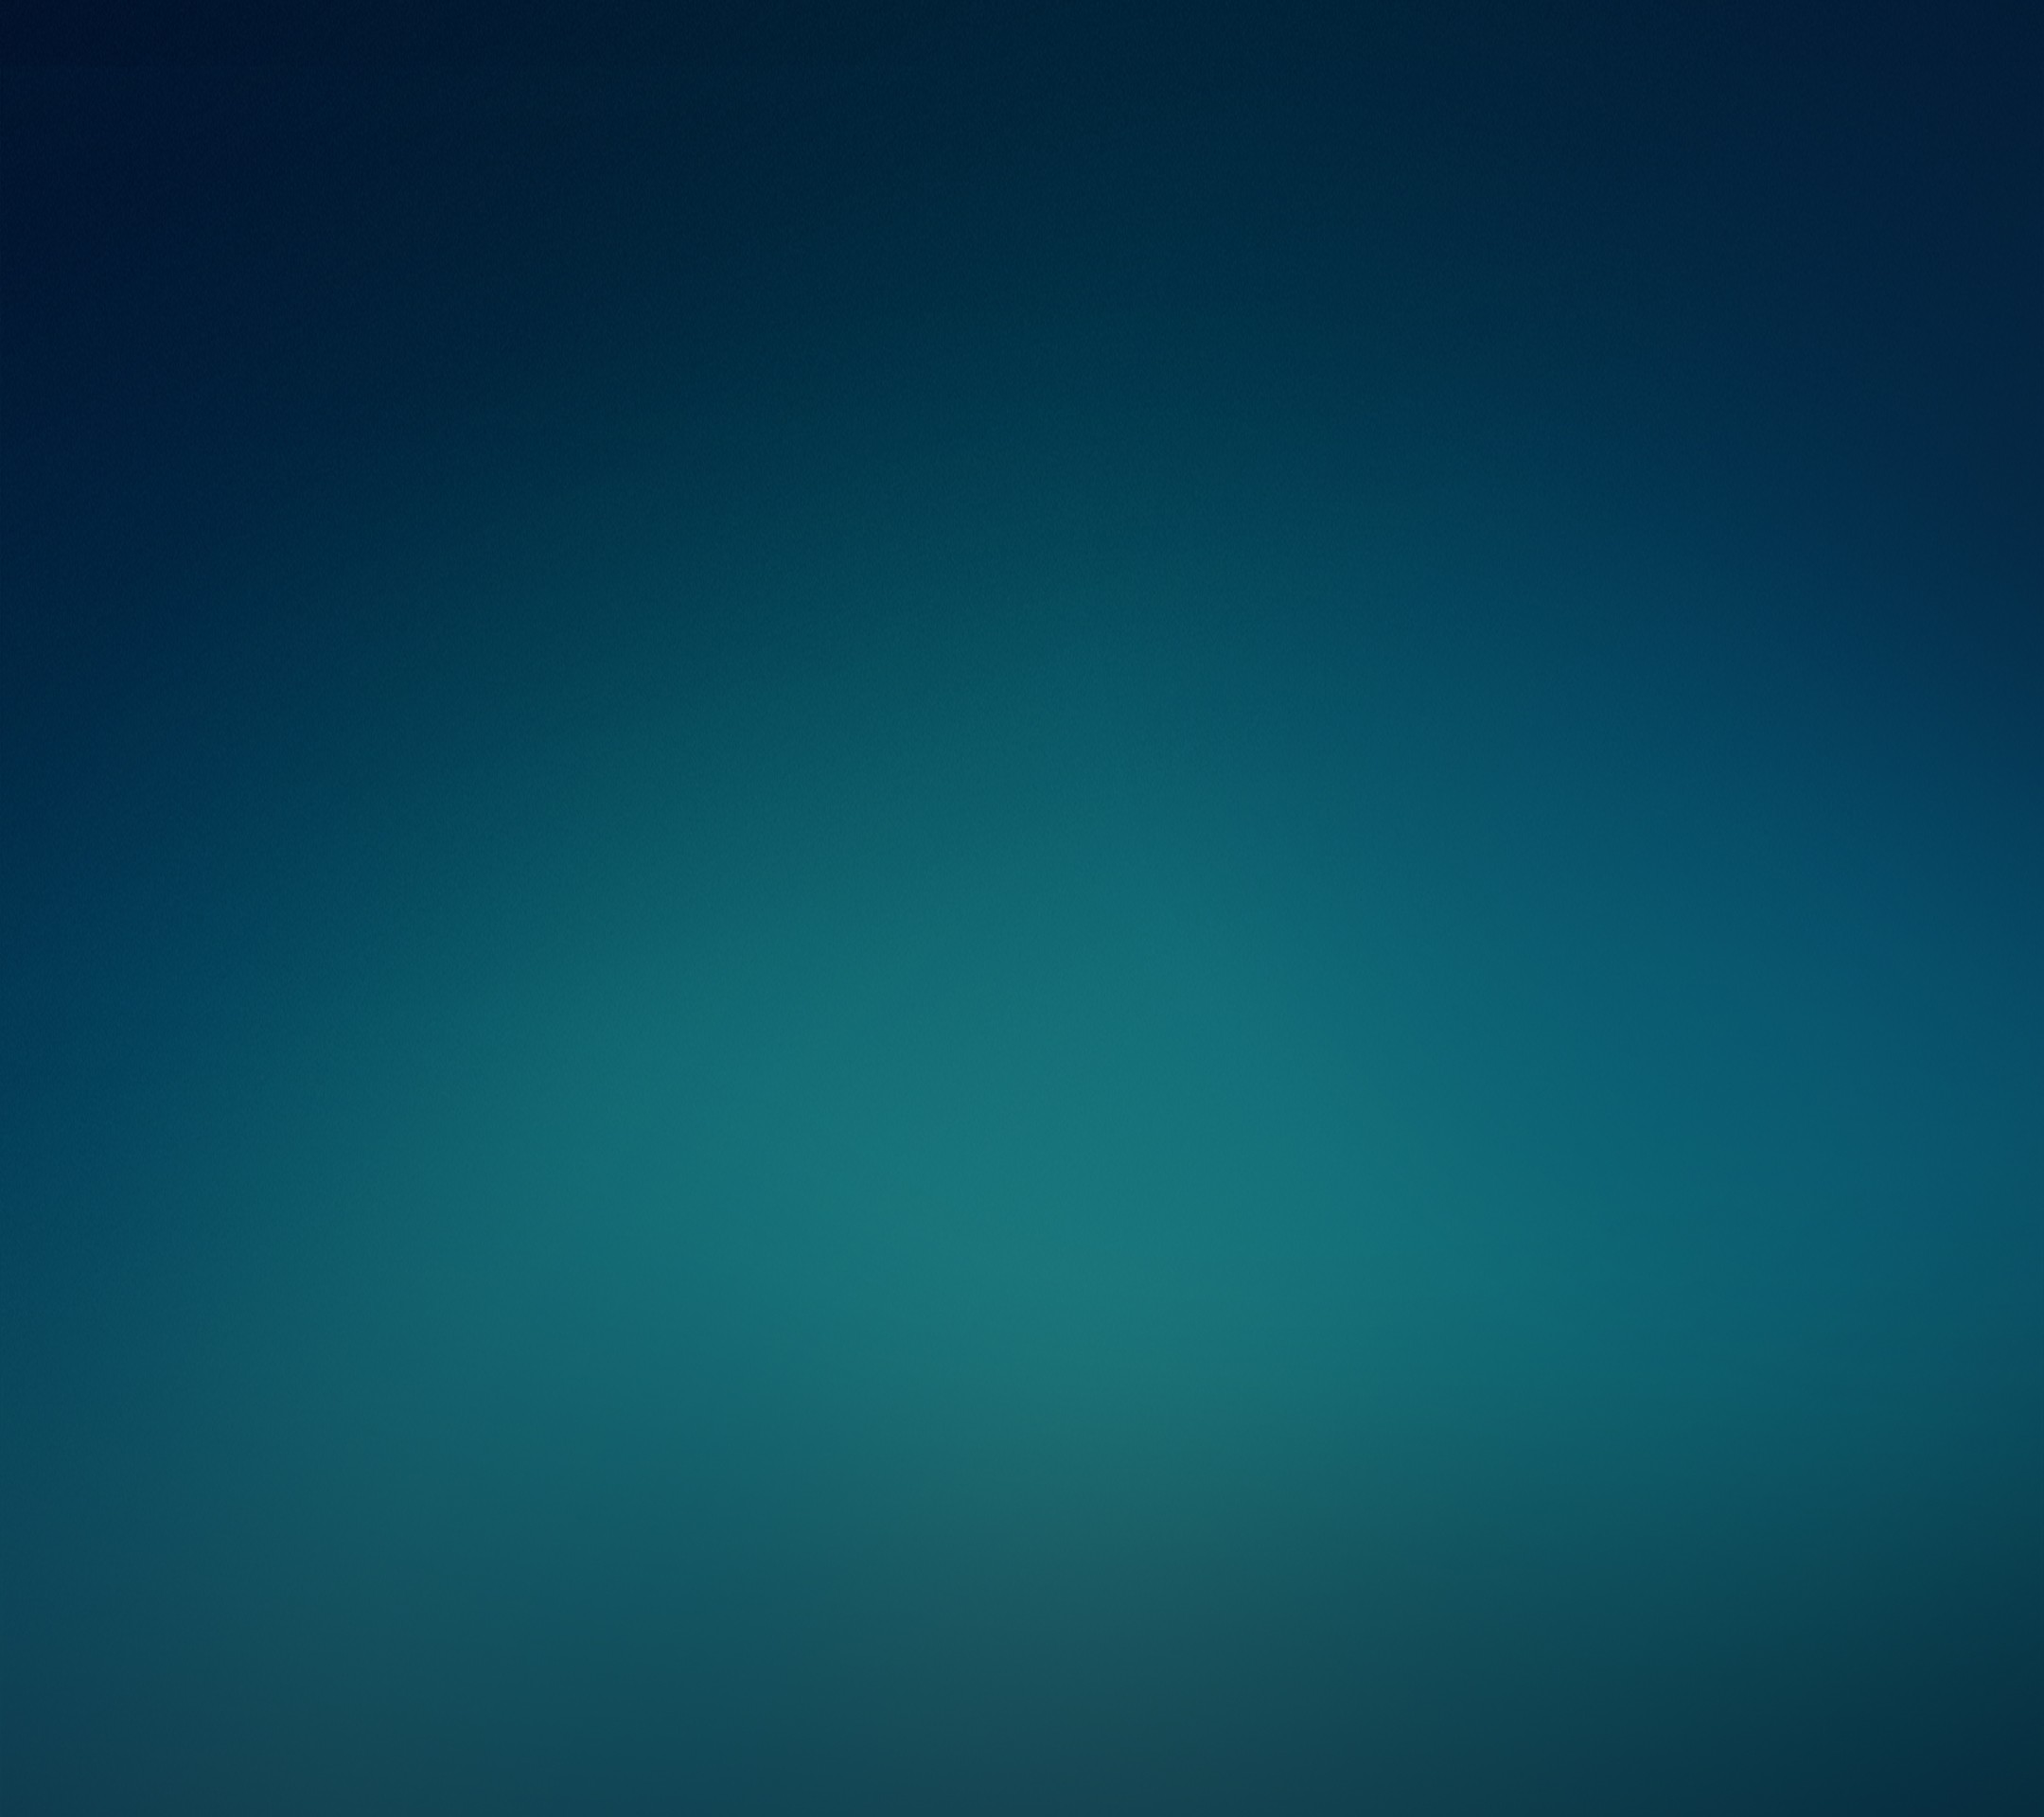 General 2160x1920 abstract gradient blue background texture digital art